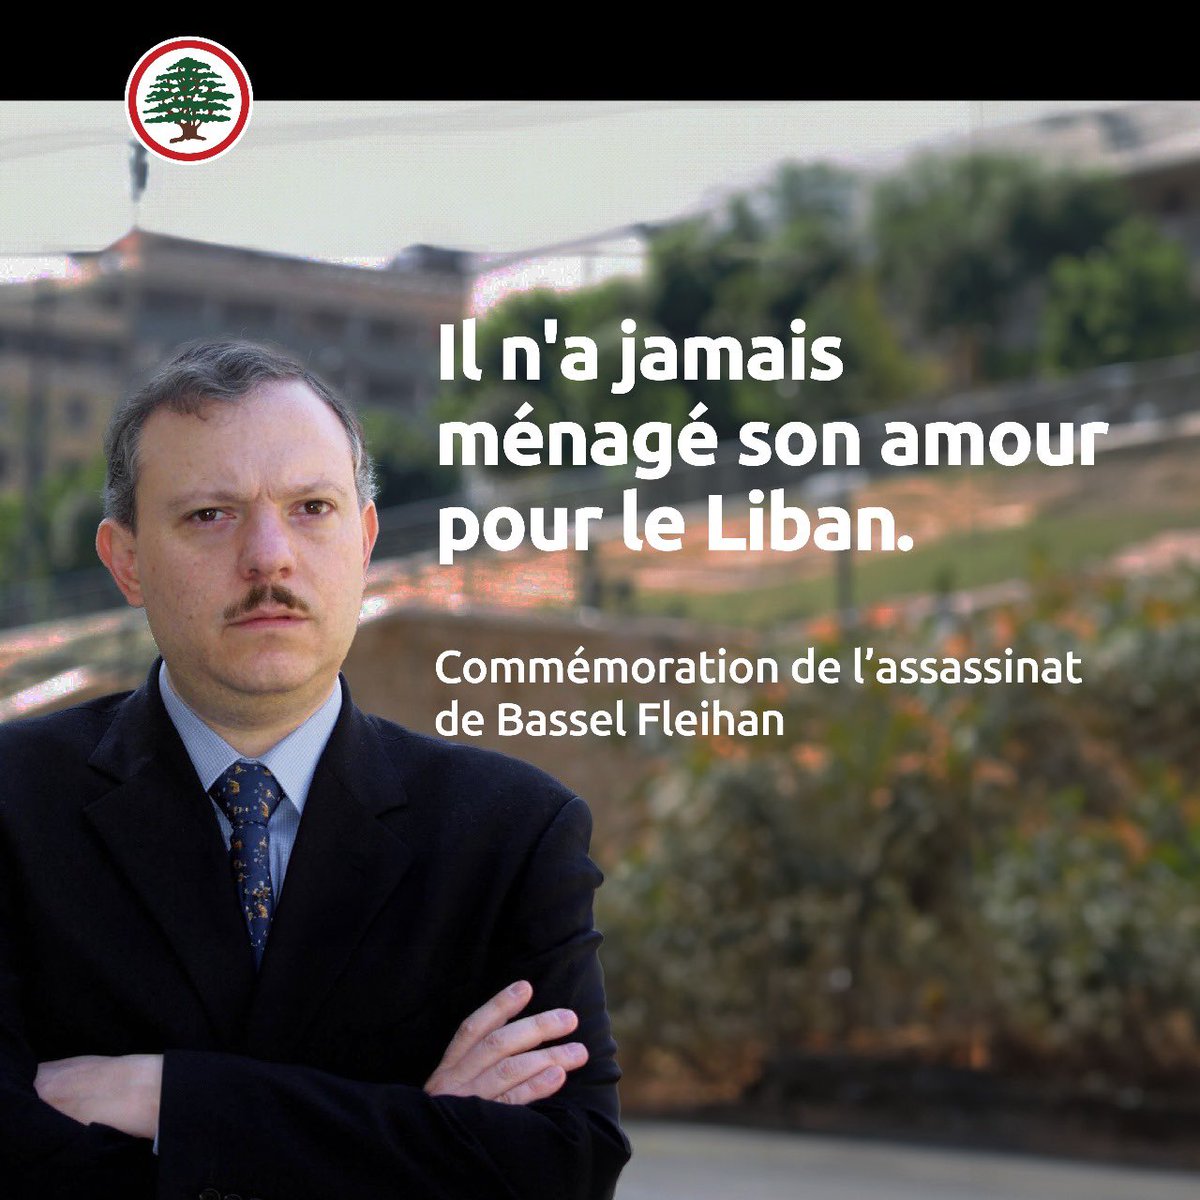 #France #Liban #Paris #Beyrouth #forceslibanaises #lebaneseforces #hariri #BasselFleihan 

#القوات_اللبنانية